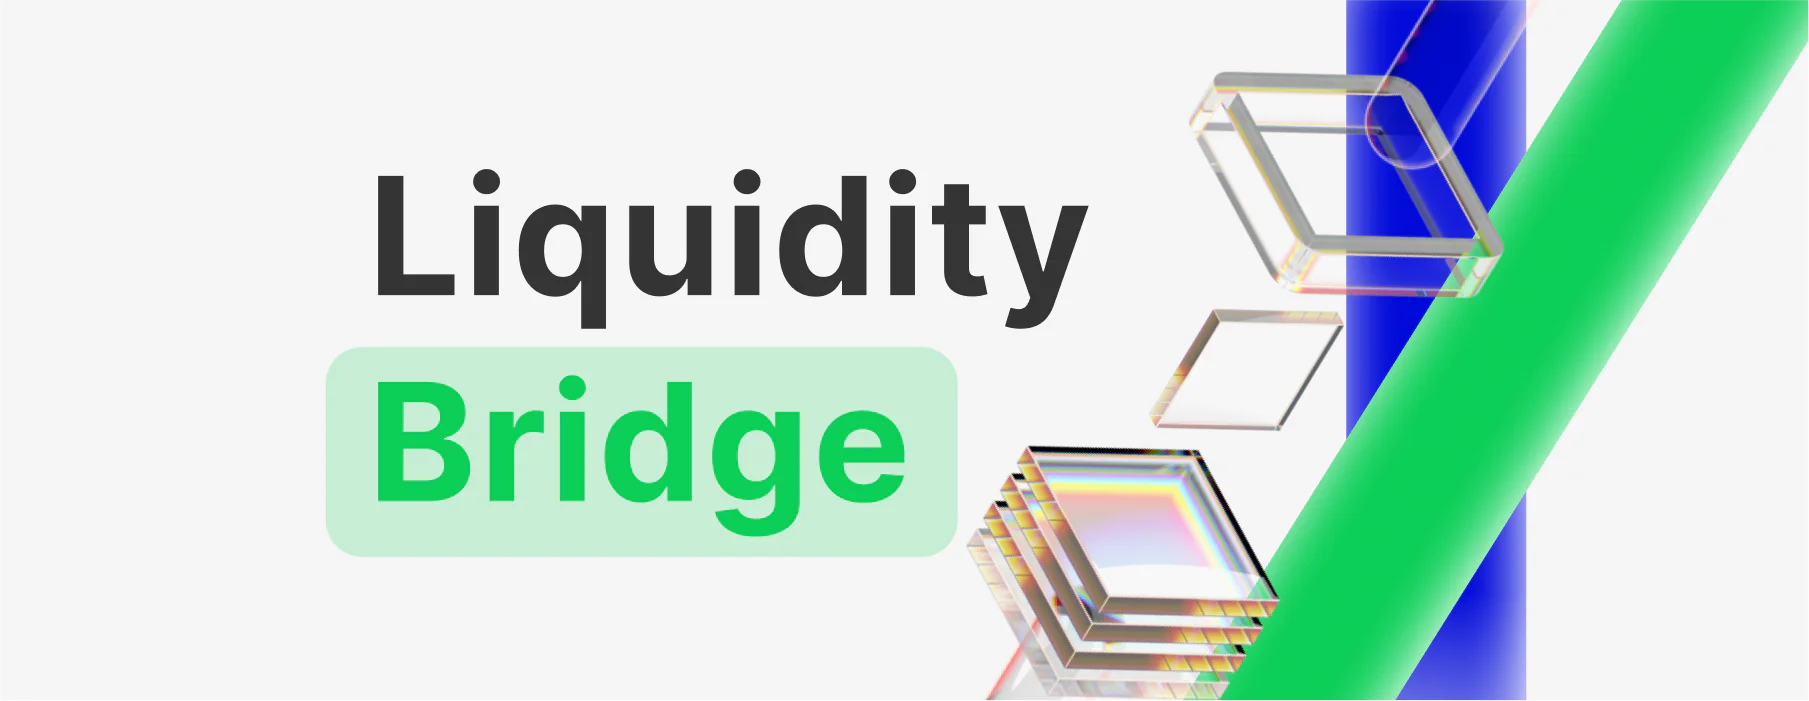 What is Liquidity Bridge? — Definition.